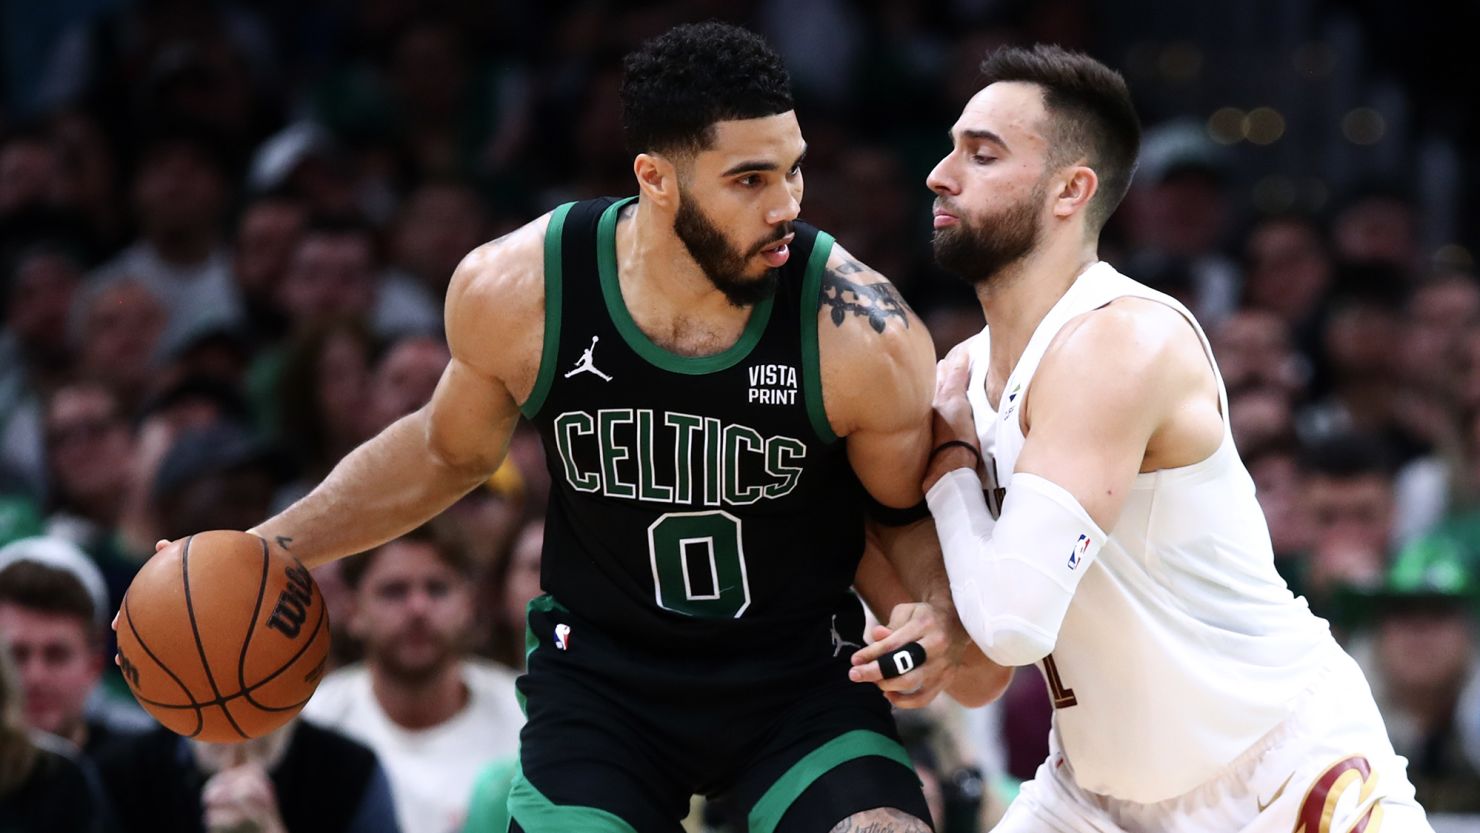 Boston Celtics’ Isolation Offense: Barkley’s Critique vs. Team’s Success in Playoffs